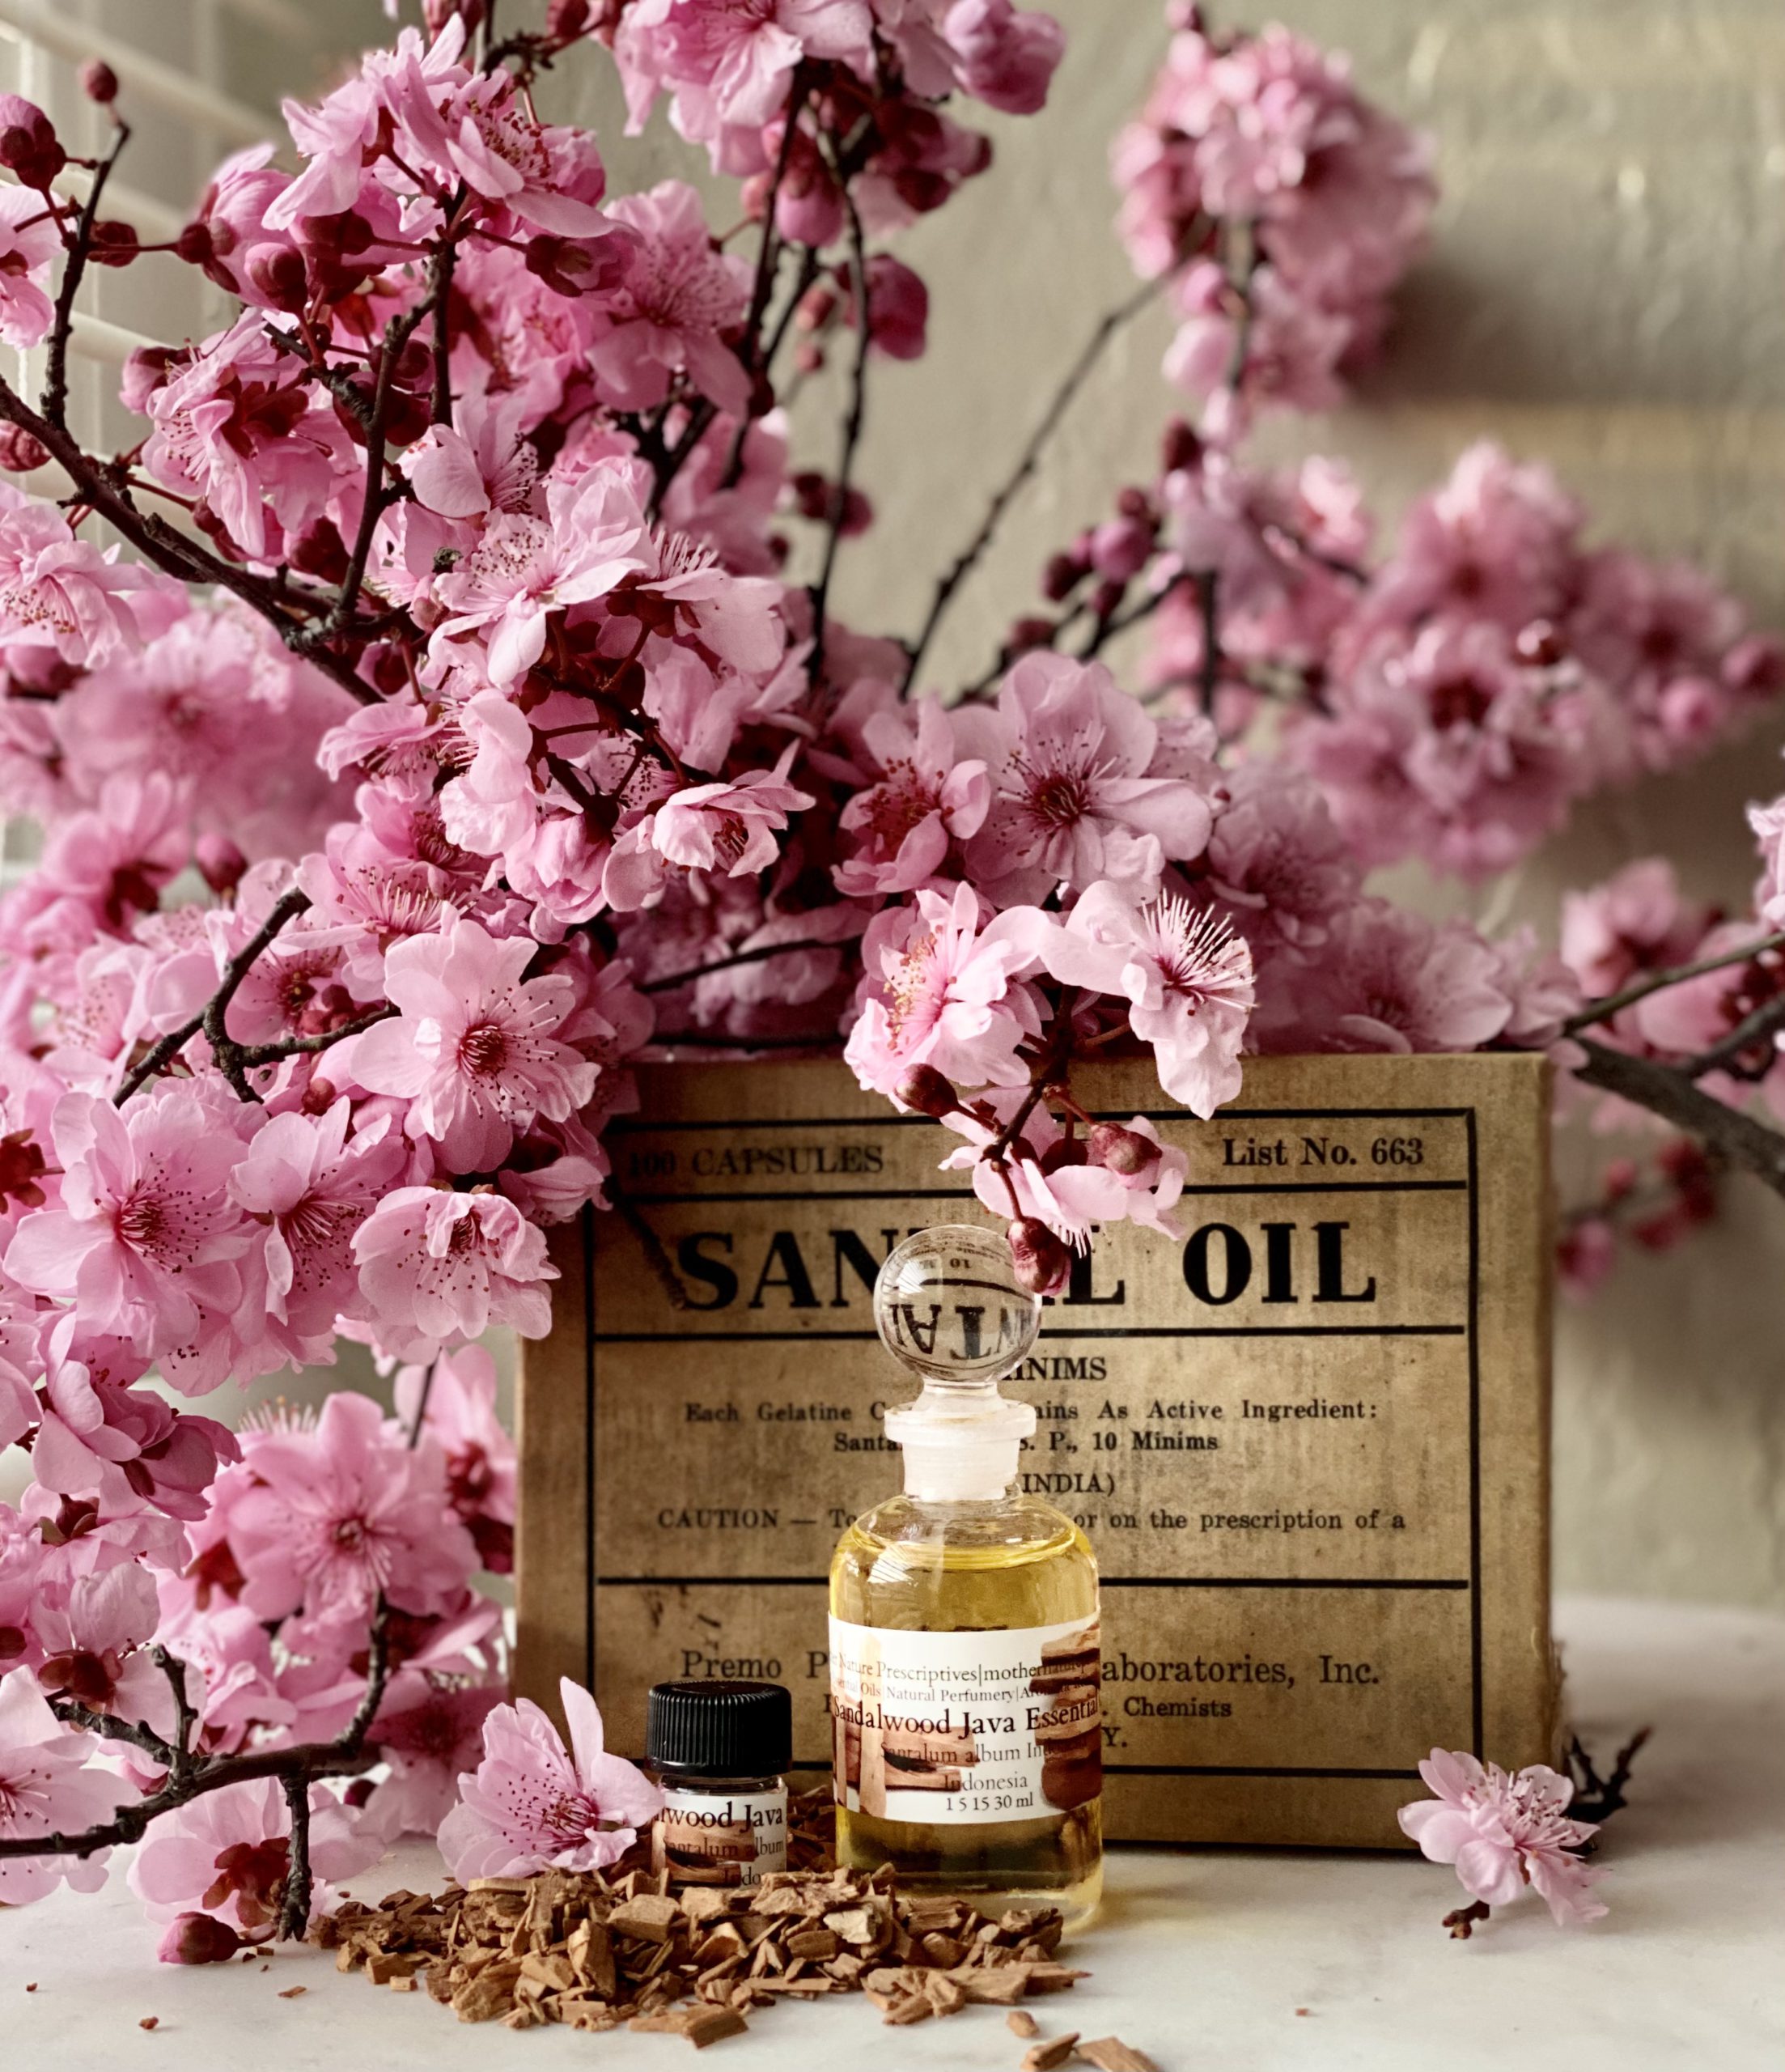 Cherry Blossom Essential Oil